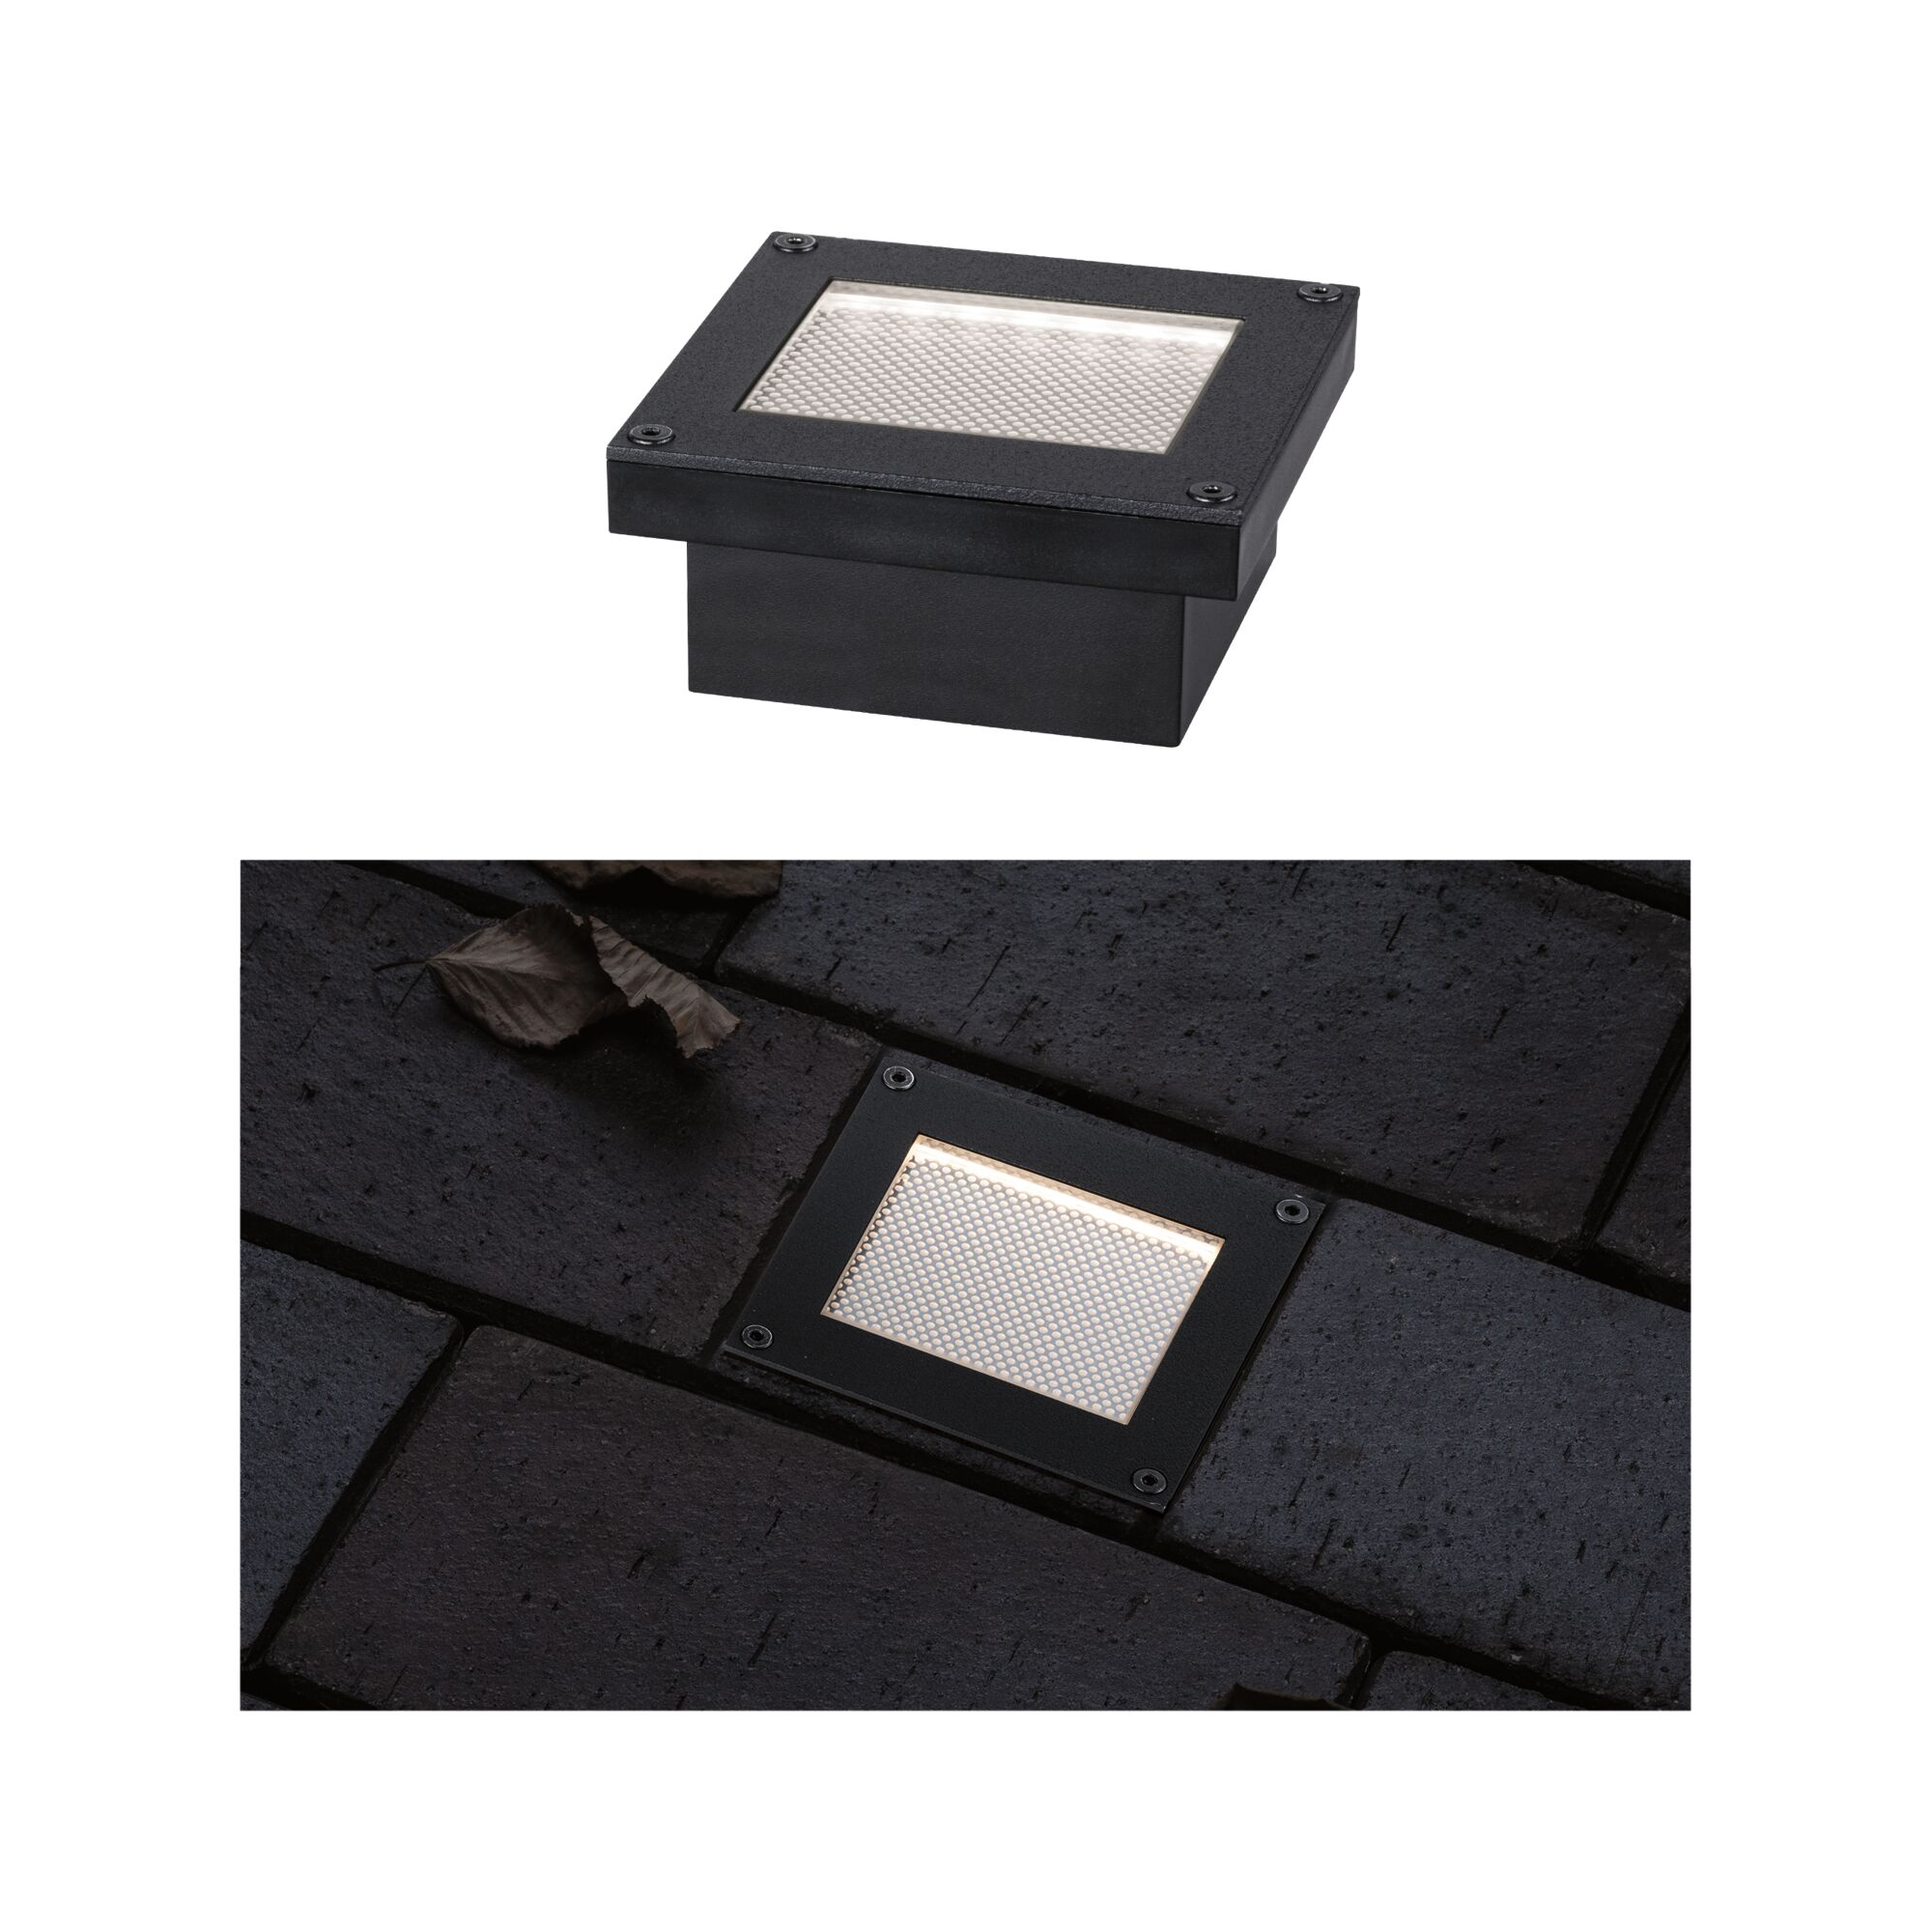 Solar-Panel 'Taija' mit Bewegungsmelder anthrazit 30 x 30 x 4,4 cm + product picture